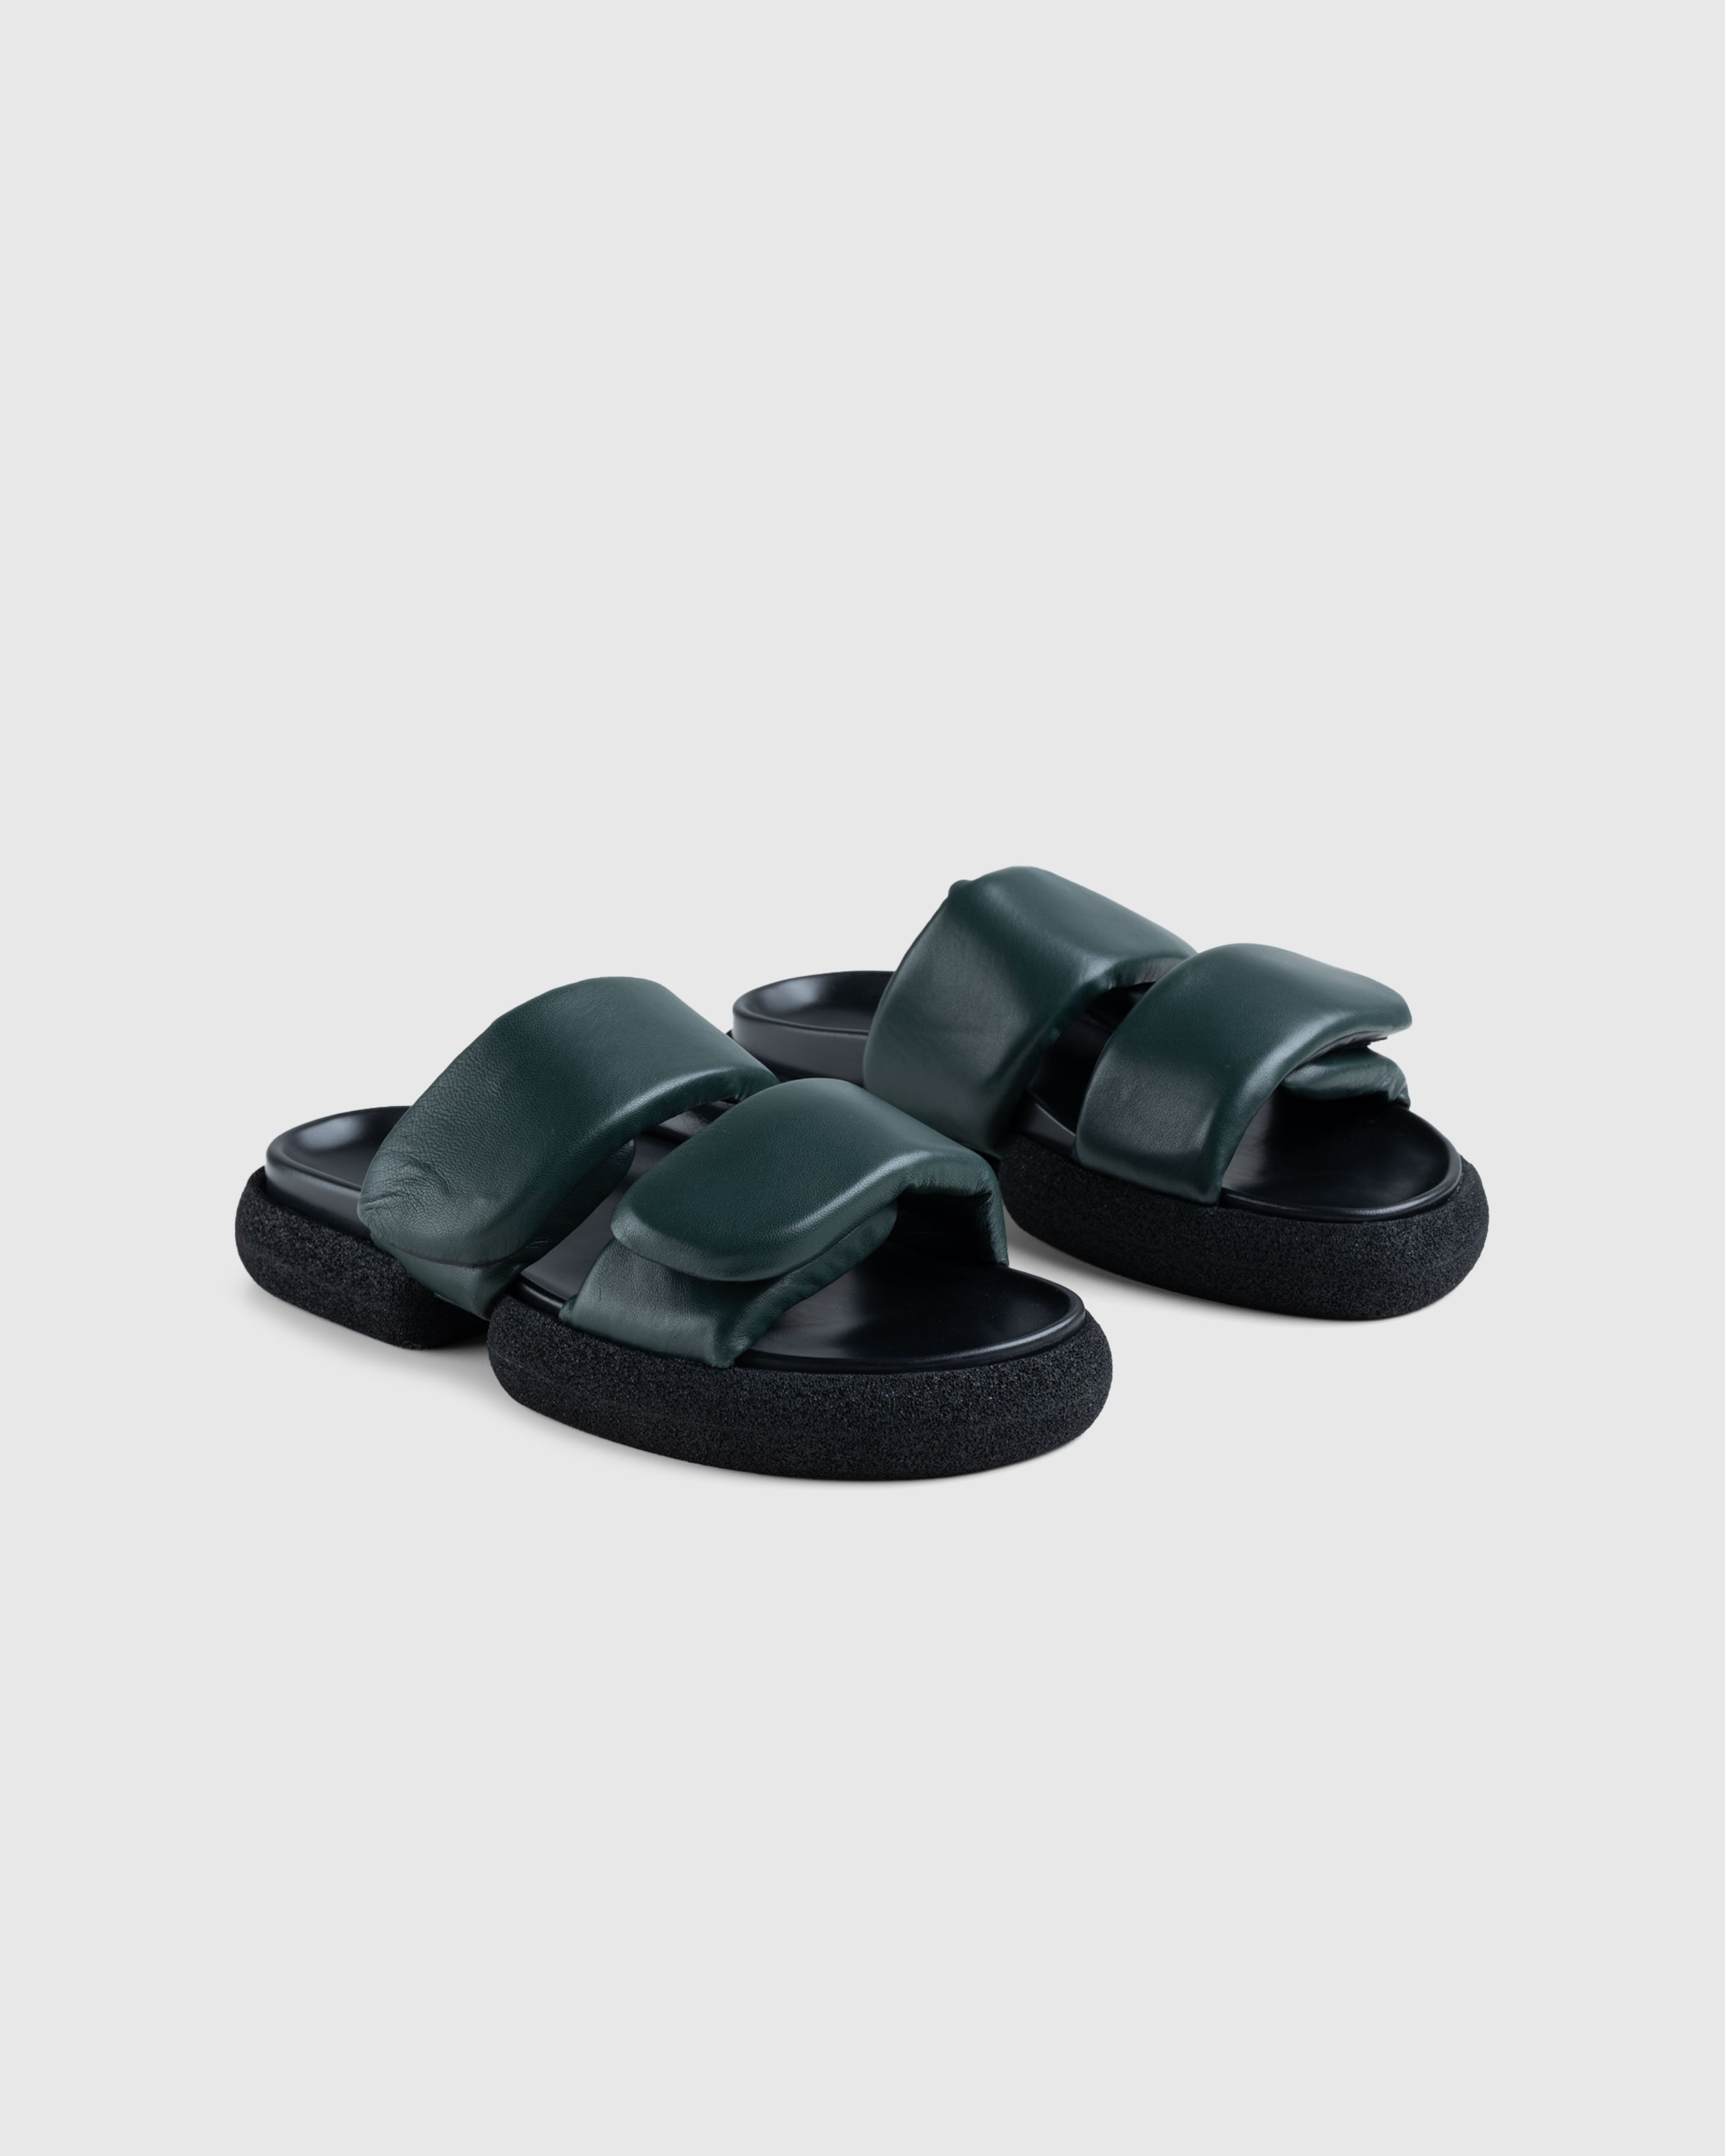 Dries van Noten - Leather Platform Sandals Green - Footwear - Green - Image 3